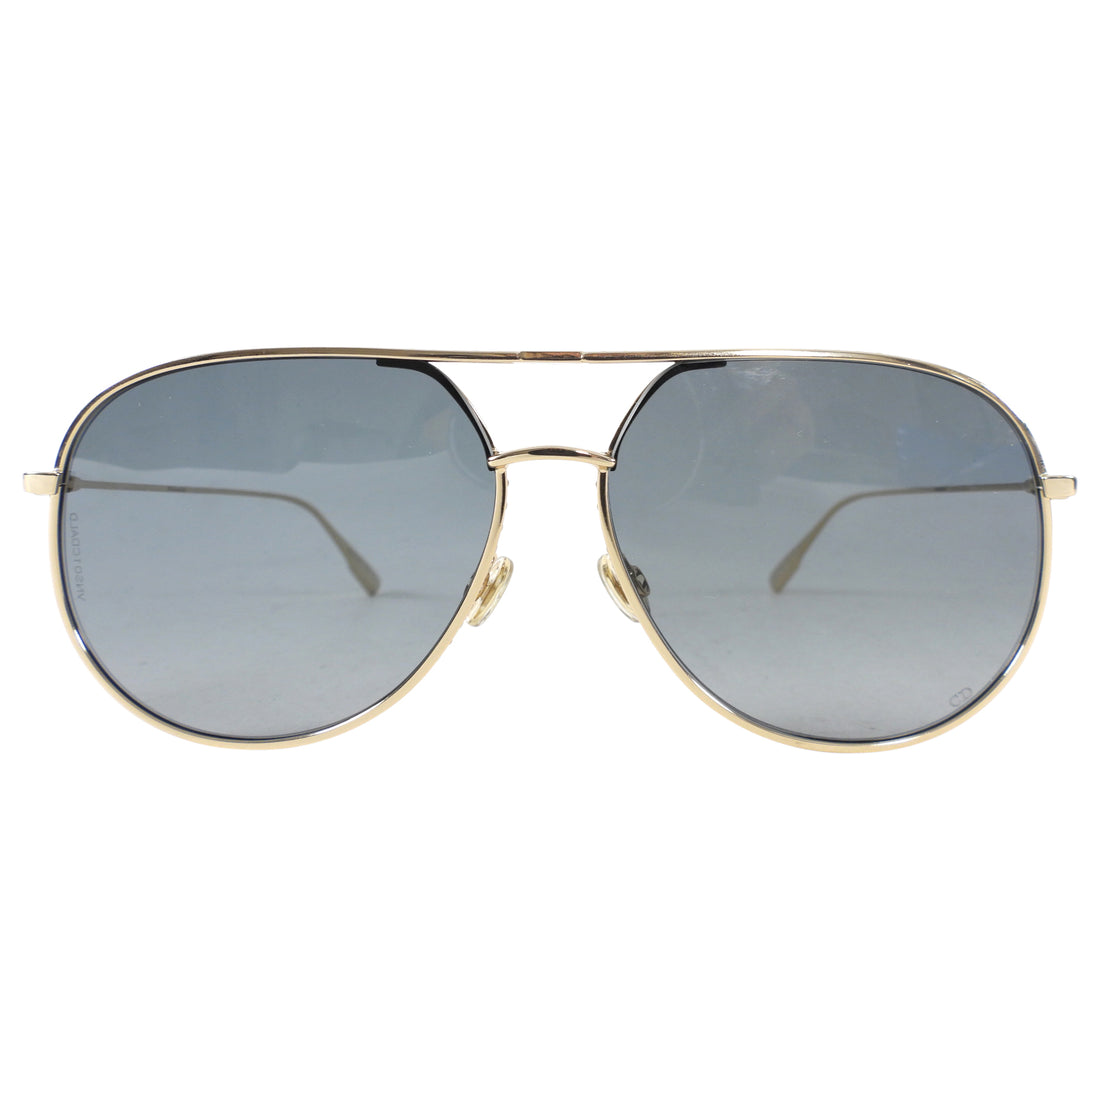 Dior Gold and Rhinestone Trim Aviator Sunglasses